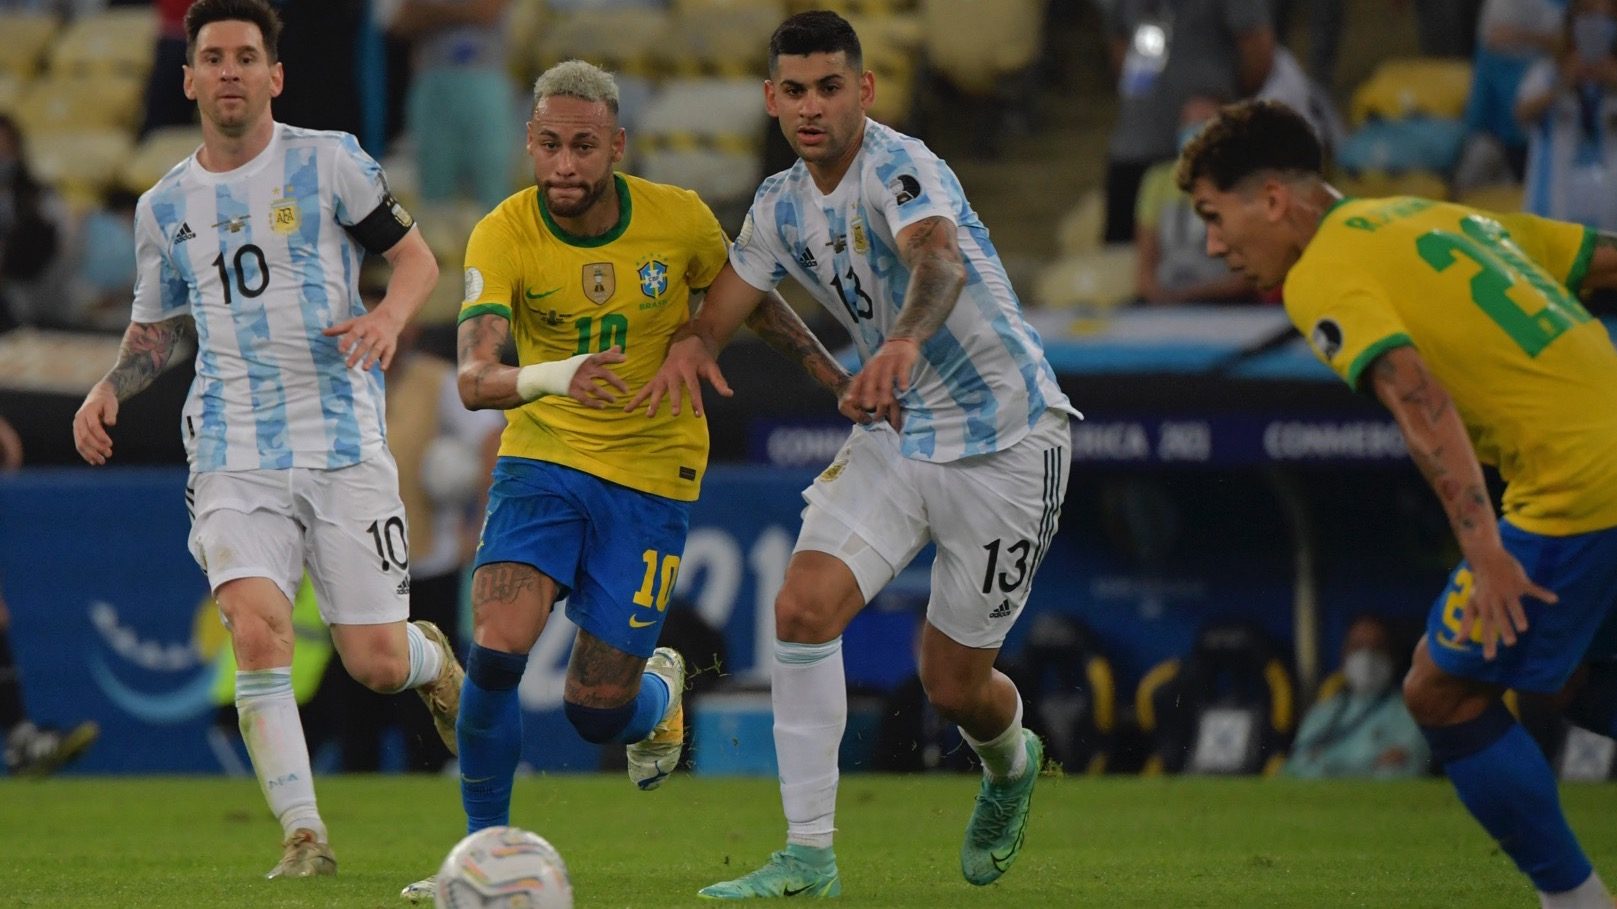 Brazil vs argentina h2h